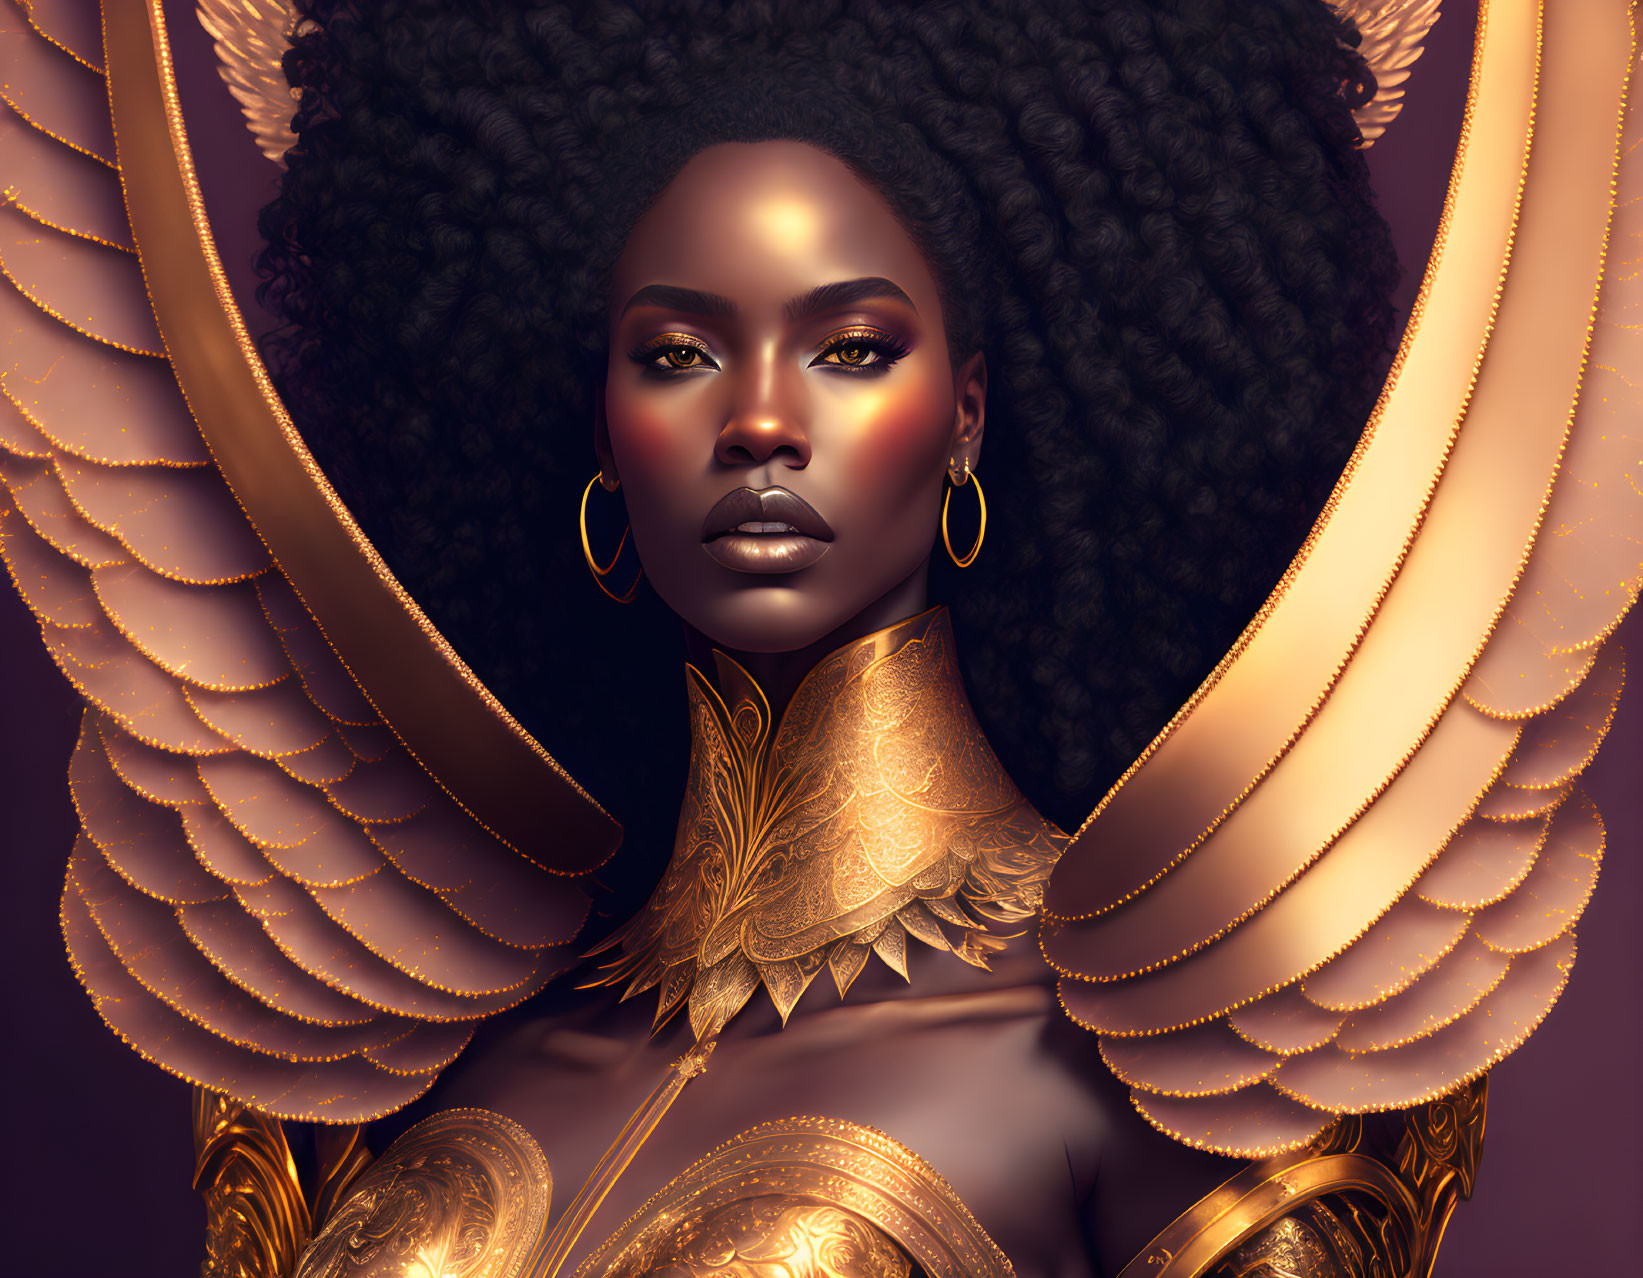 Regal dark-skinned woman in golden armor and wings